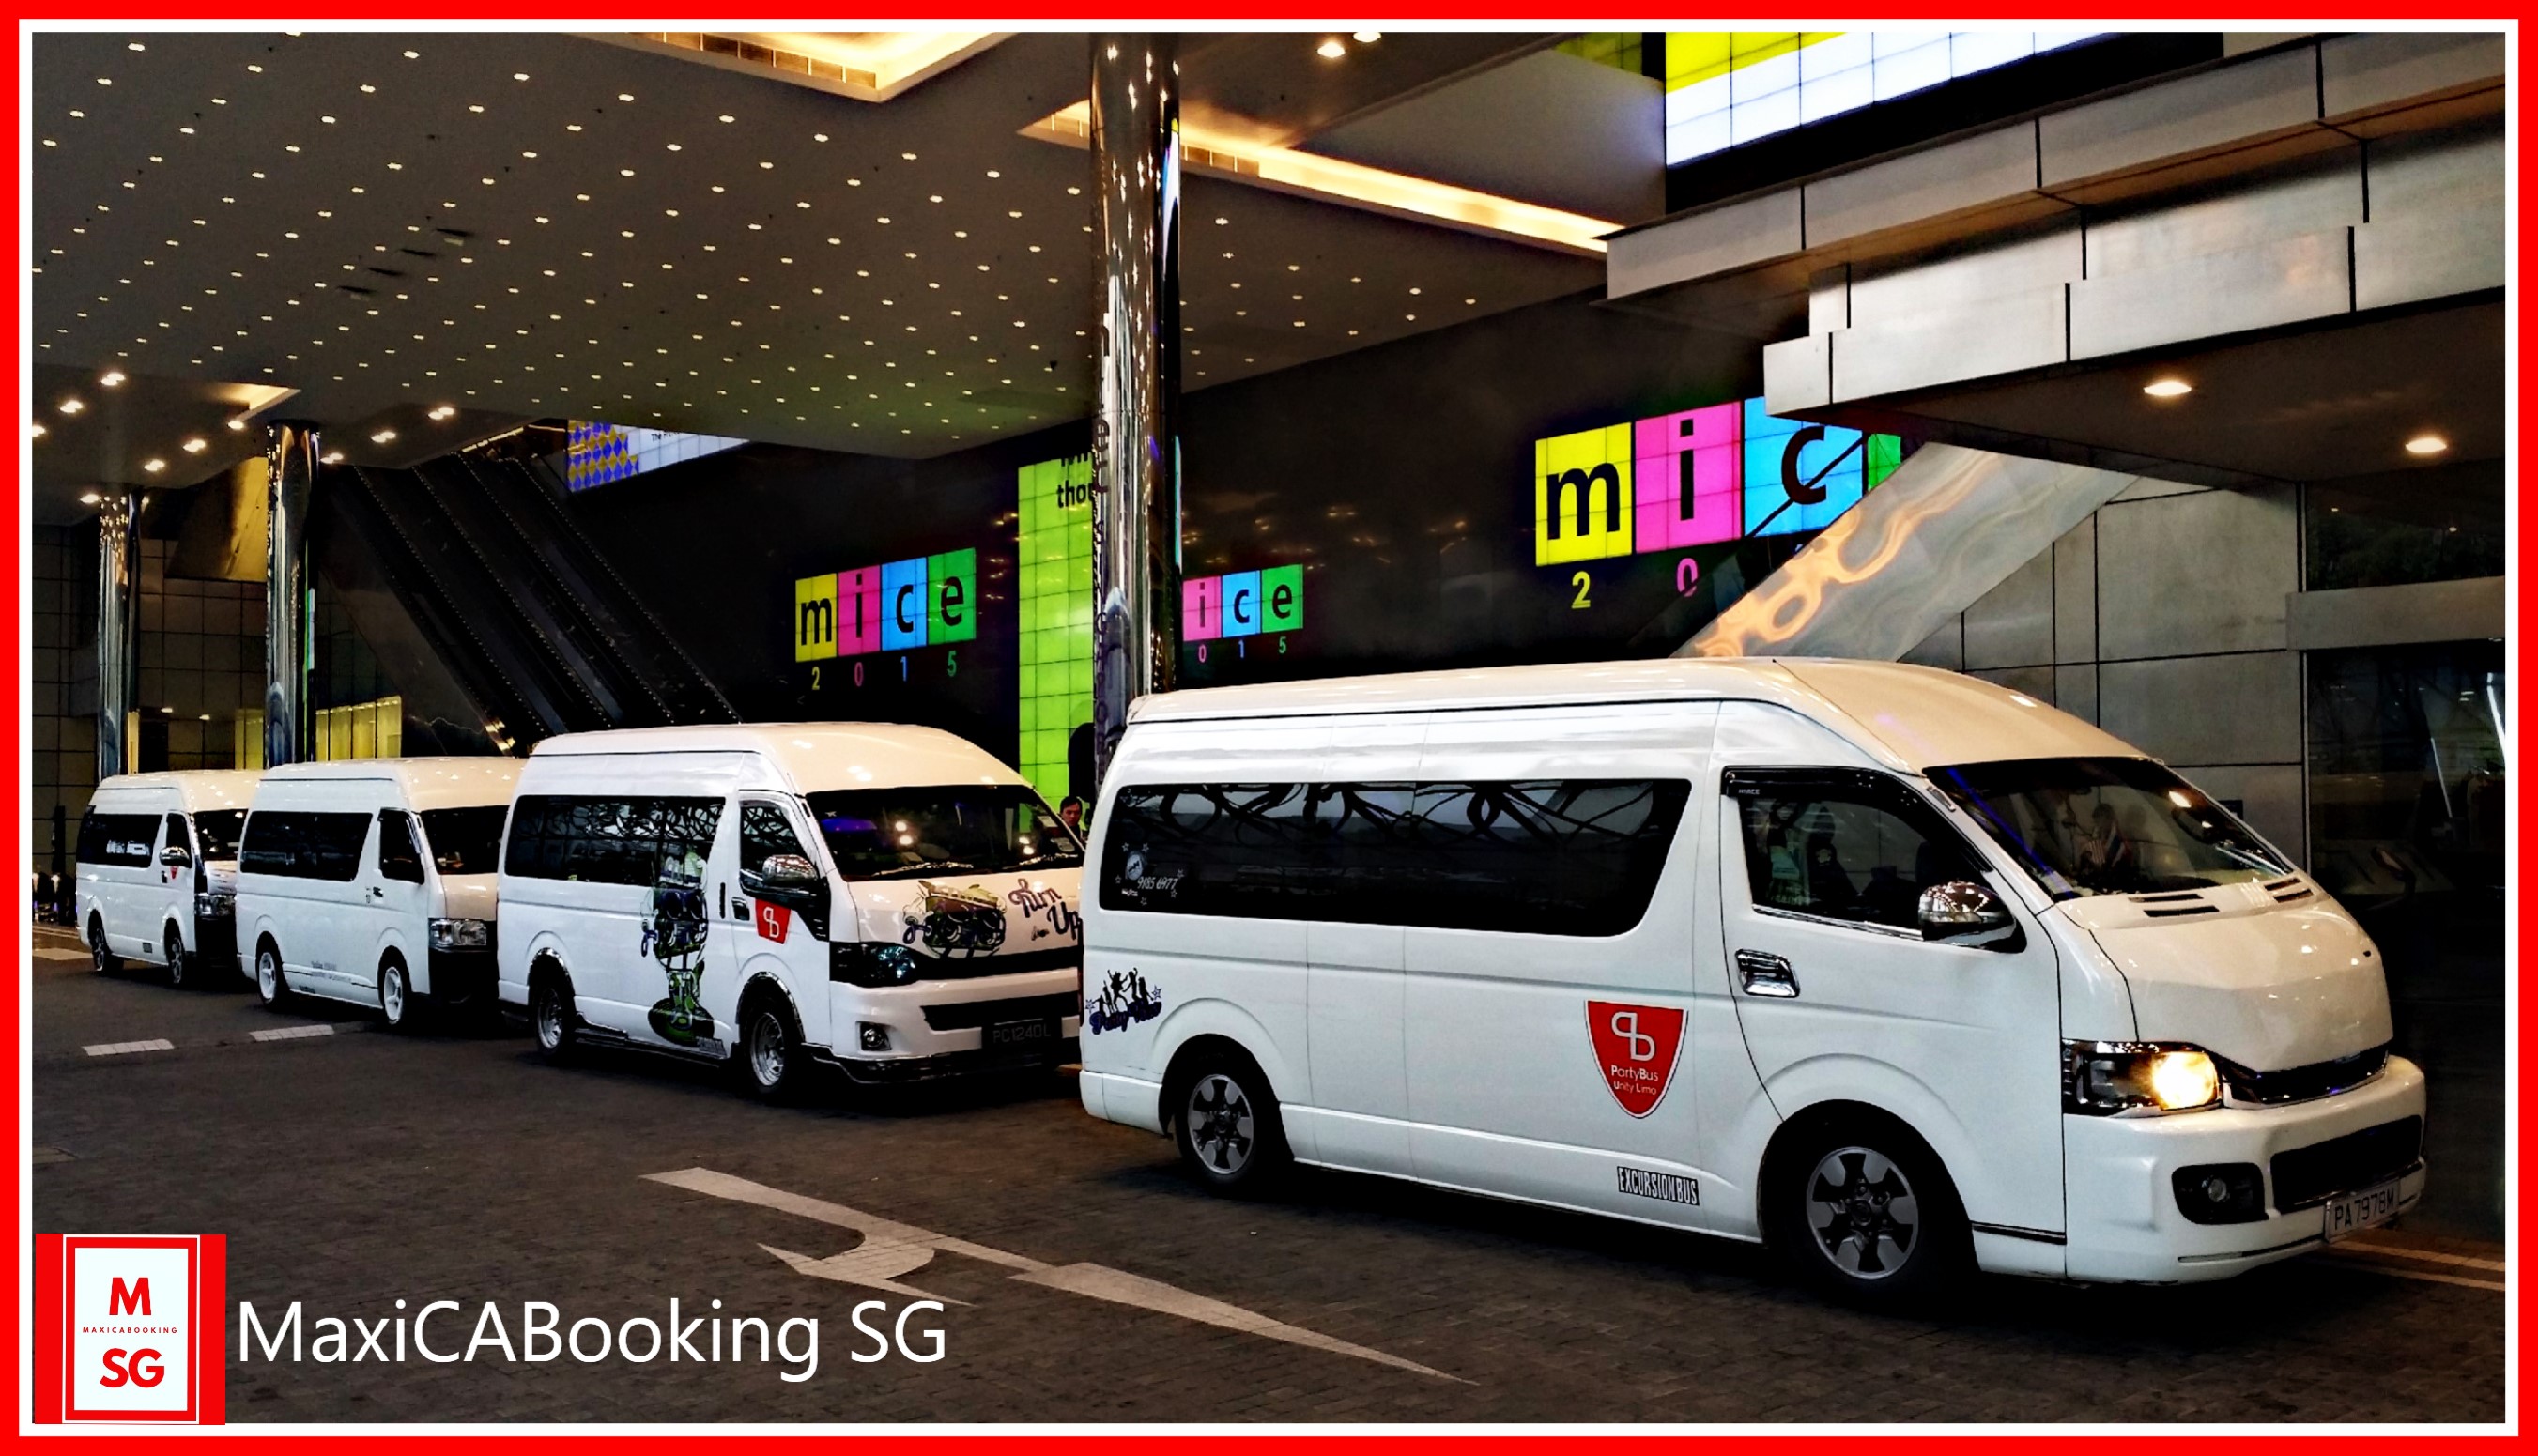 Maxi Cab Booking - Limousine Bus Singapore